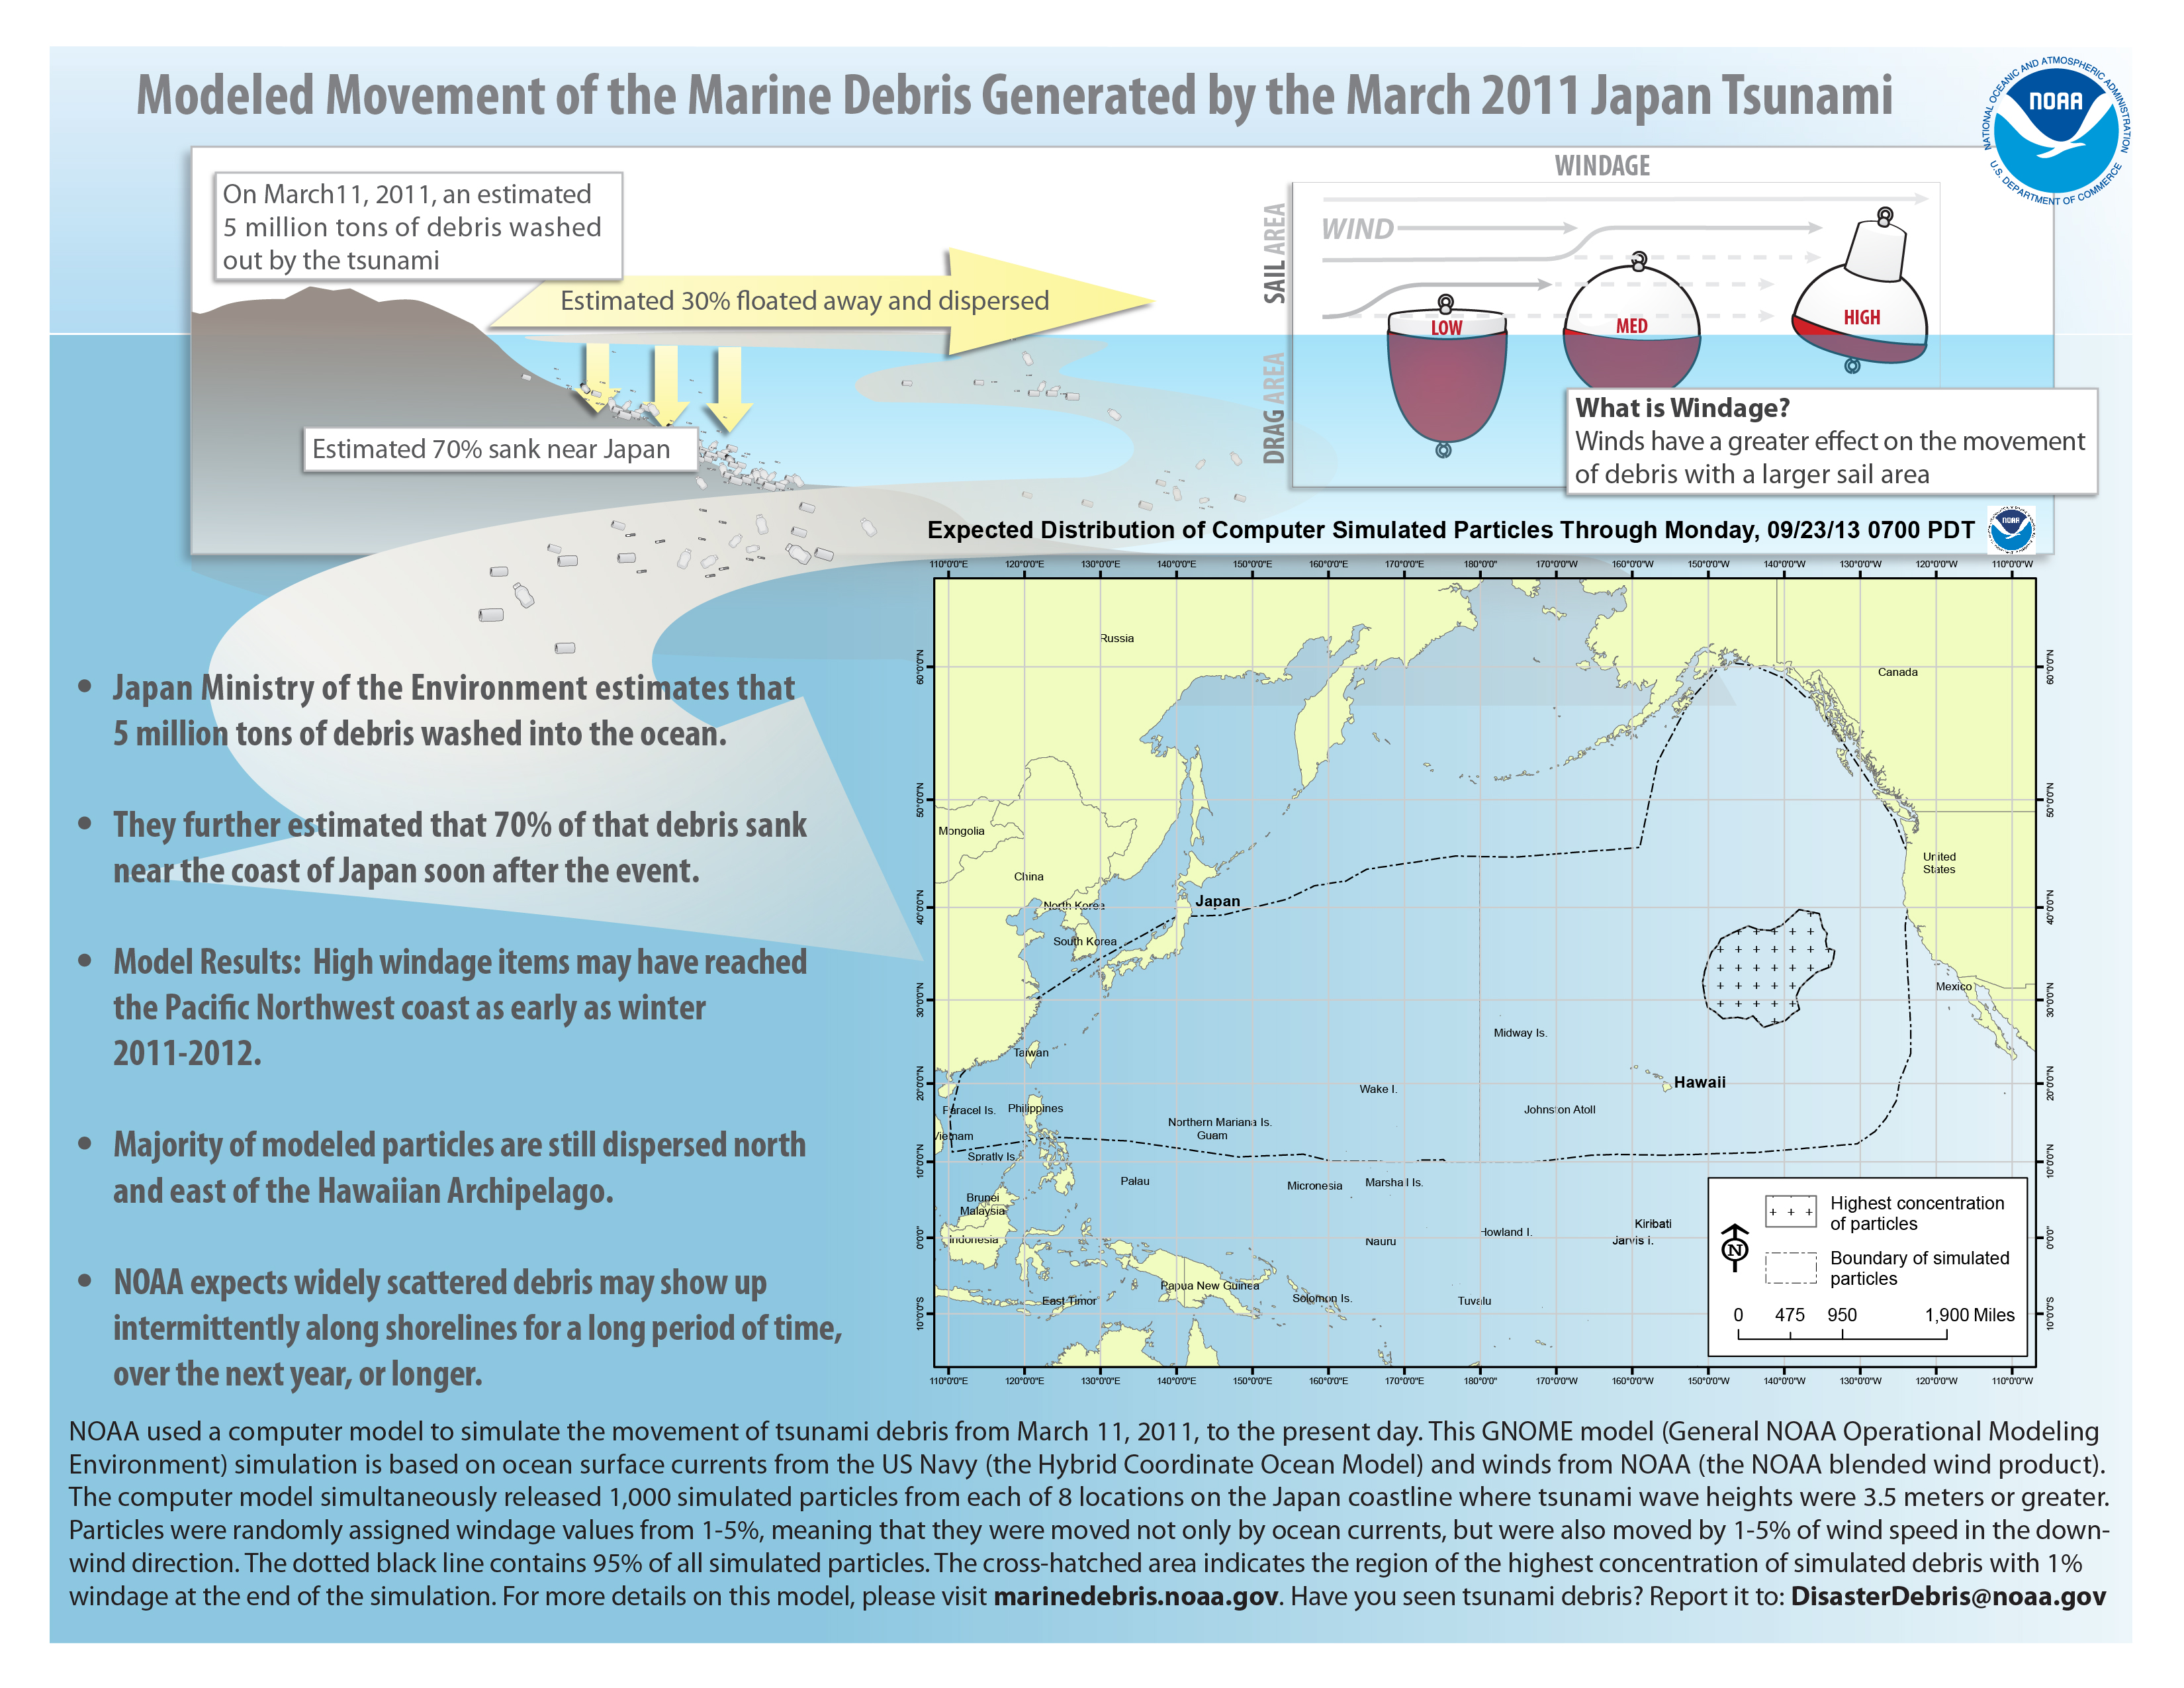 http://response.restoration.noaa.gov/sites/default/files/japan-tsunami-debris-modeling-graphic-09-23-13_noaa.jpg